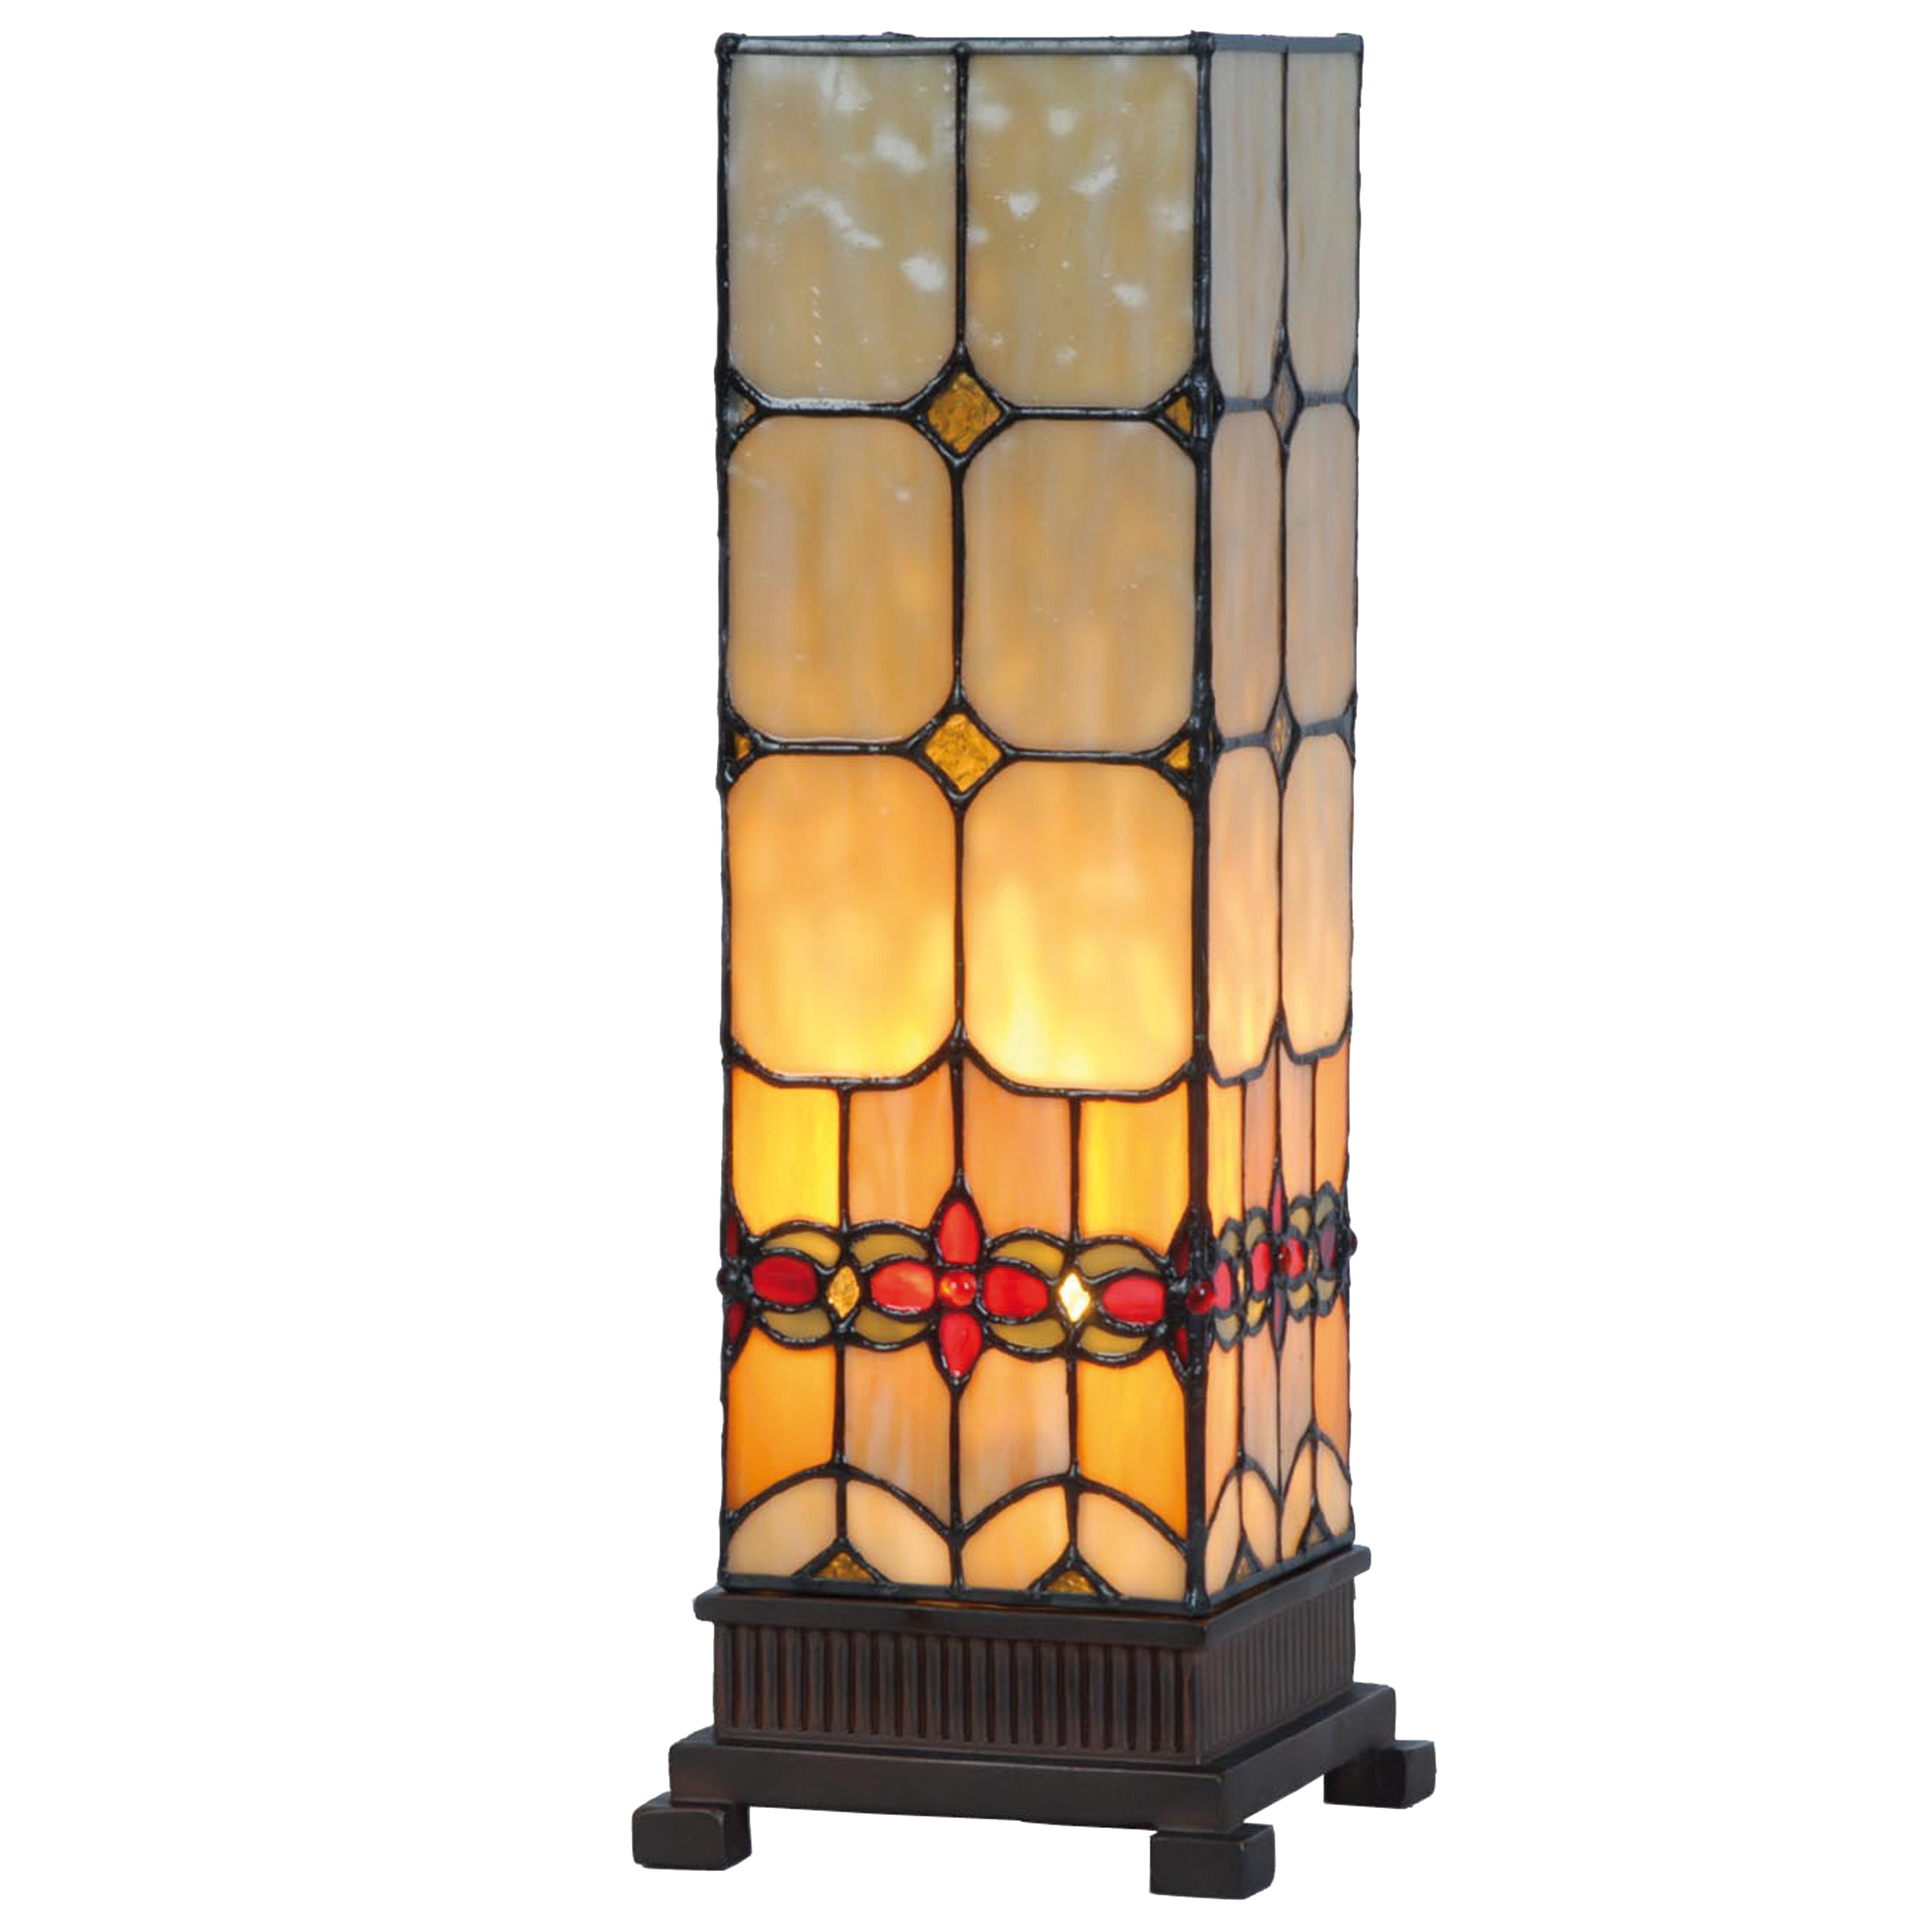 Tiffany Tischlampe Lampe Fireplace 0,35 m